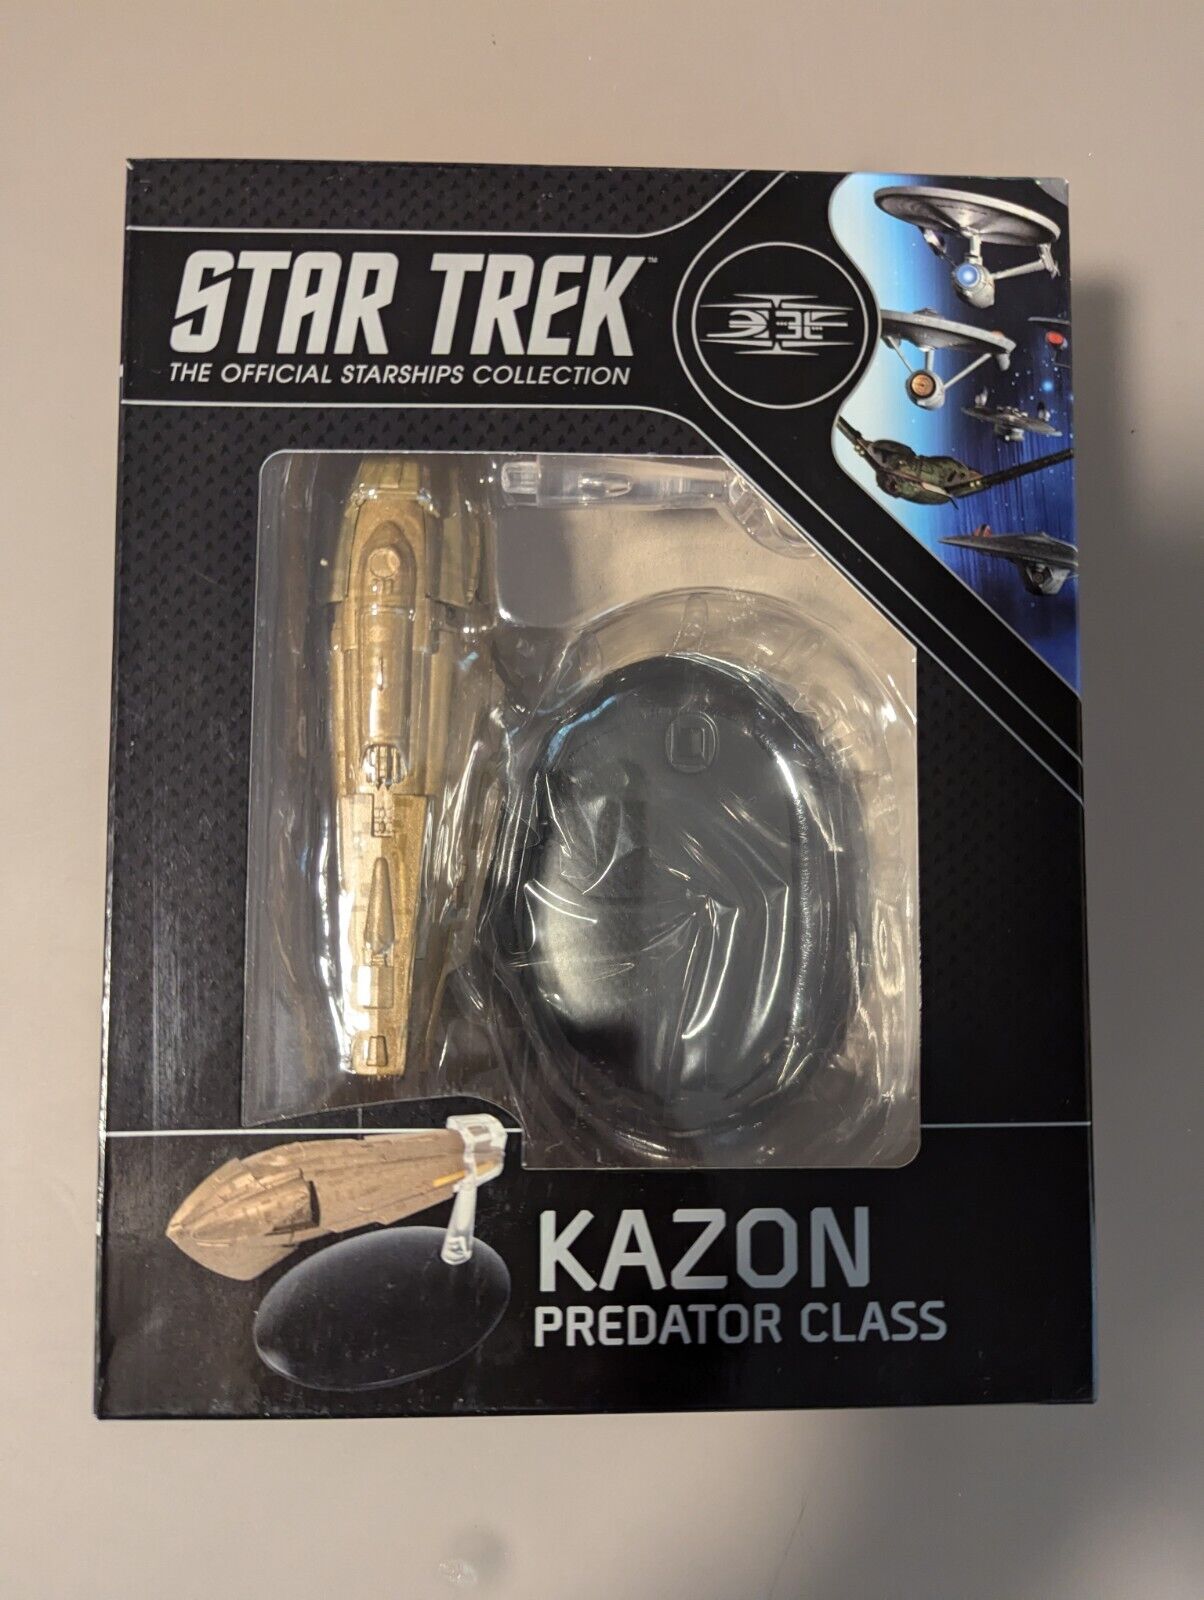 Kazon Predator Class Star Trek Eaglemoss Bonus Edition new in box #531 + Magazin